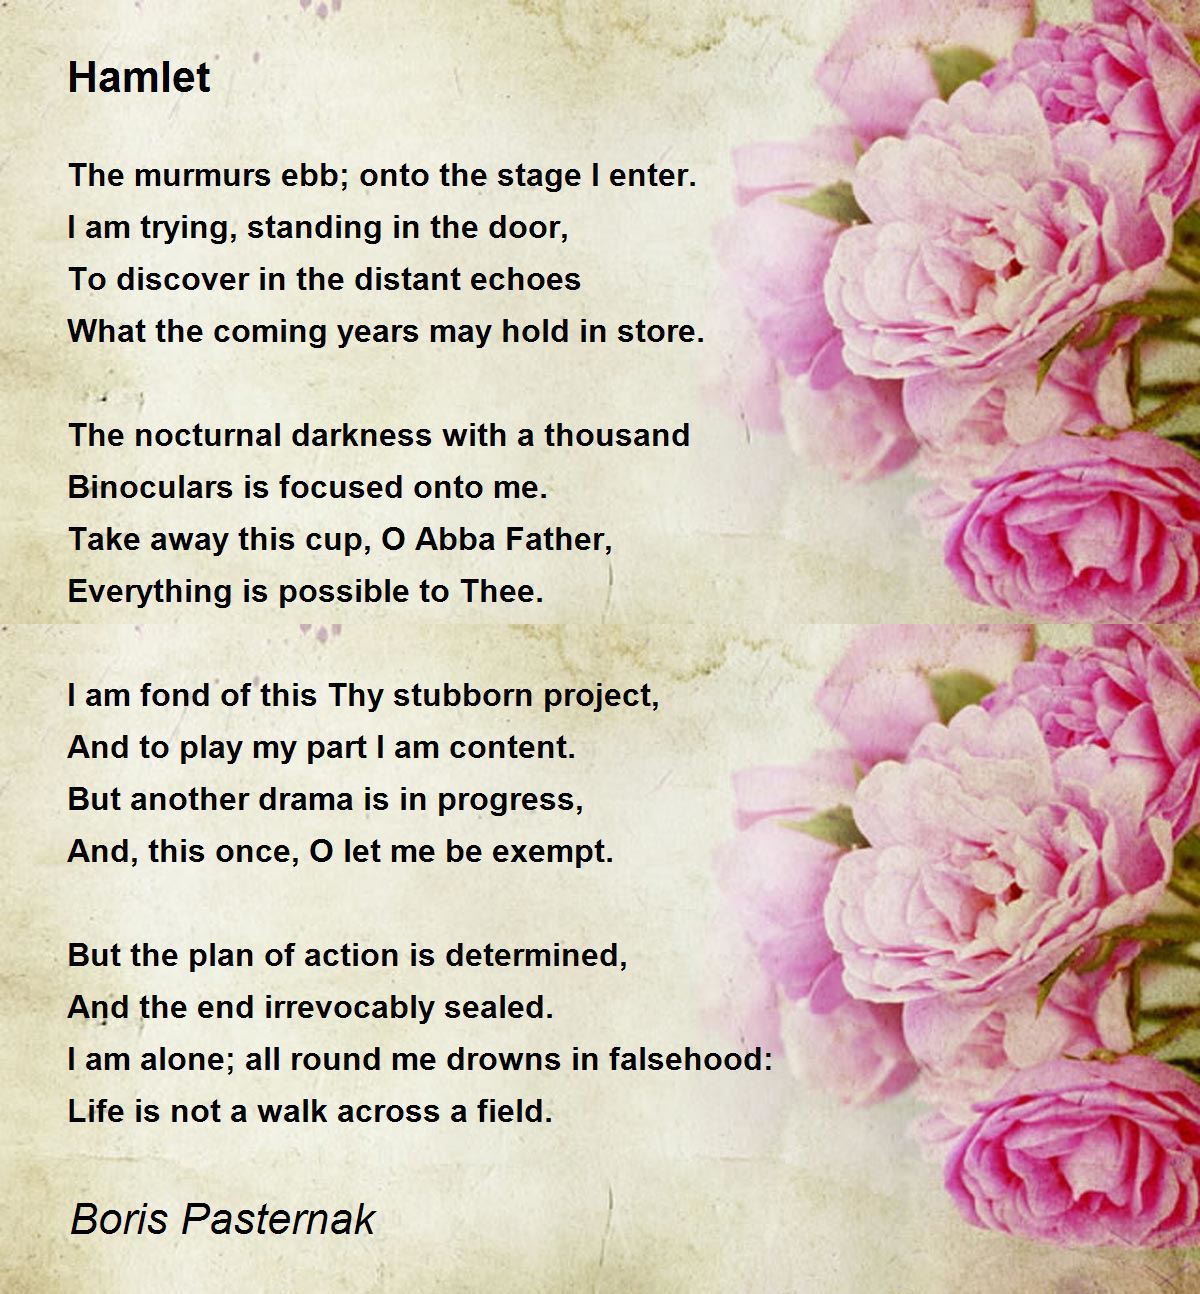 Hamlet by Boris Pasternak - Hamlet Poem